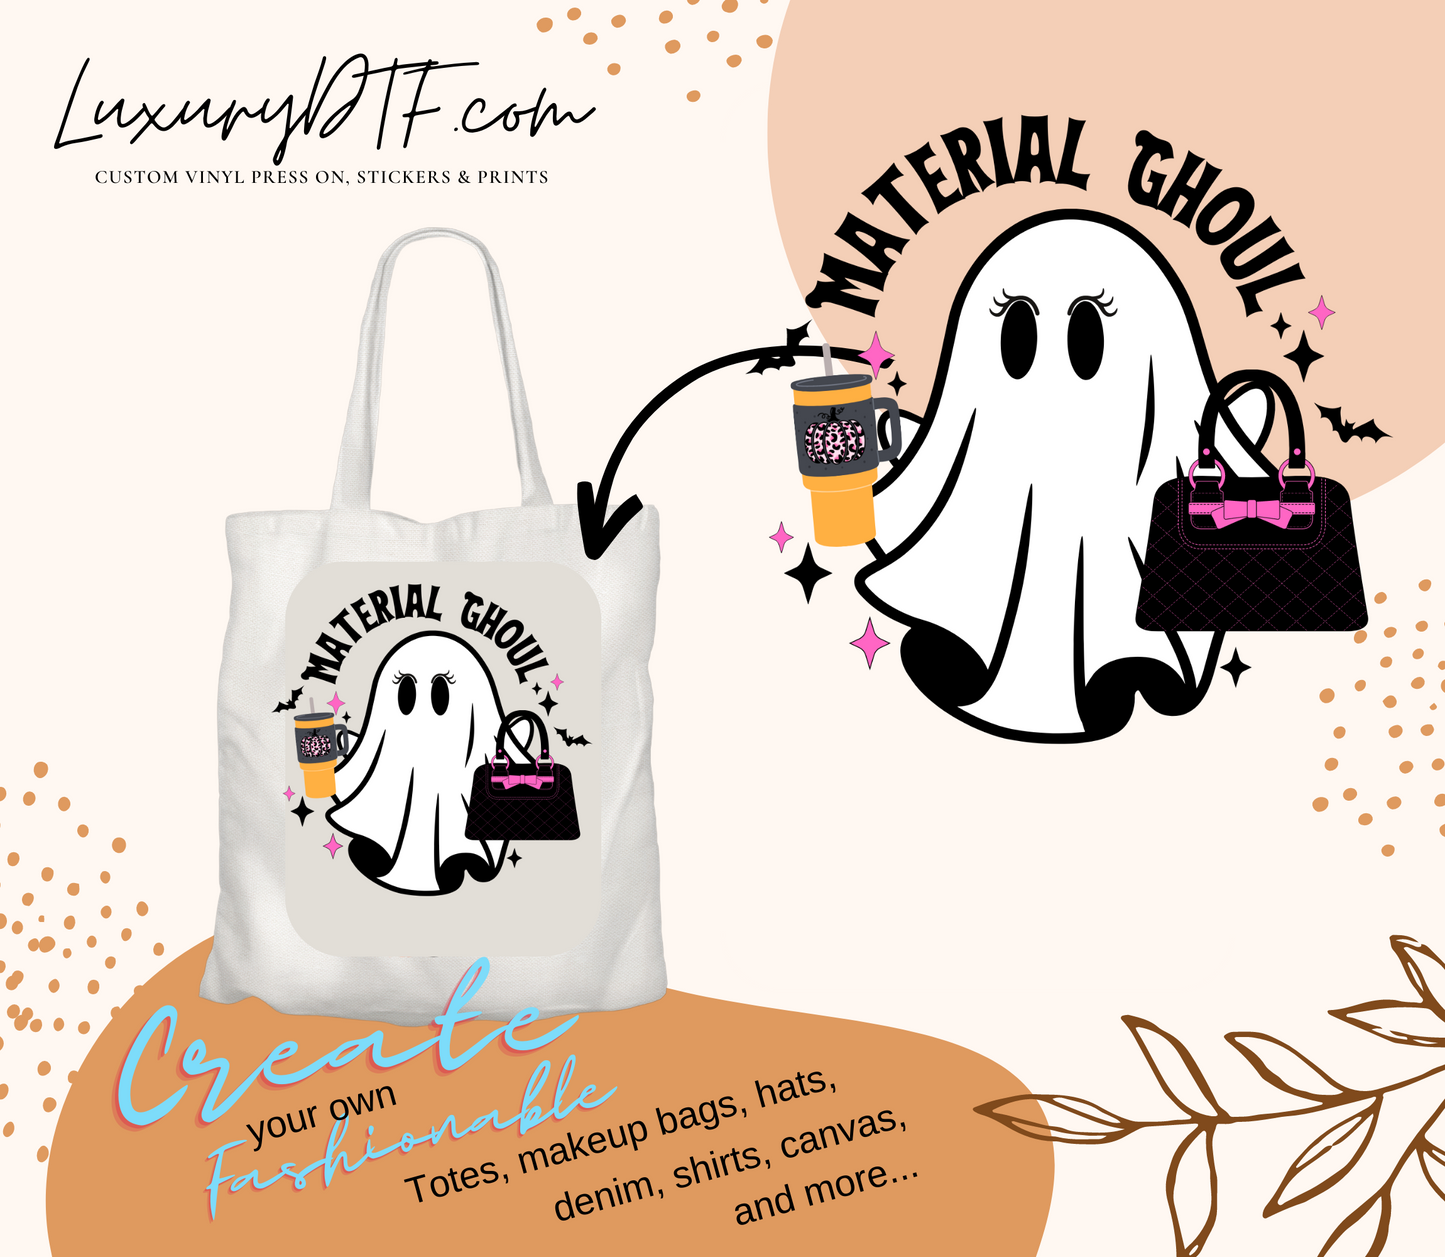 Versatile DTF transfer: Retro ghost design on tote bag from LuxuryDTF.com.